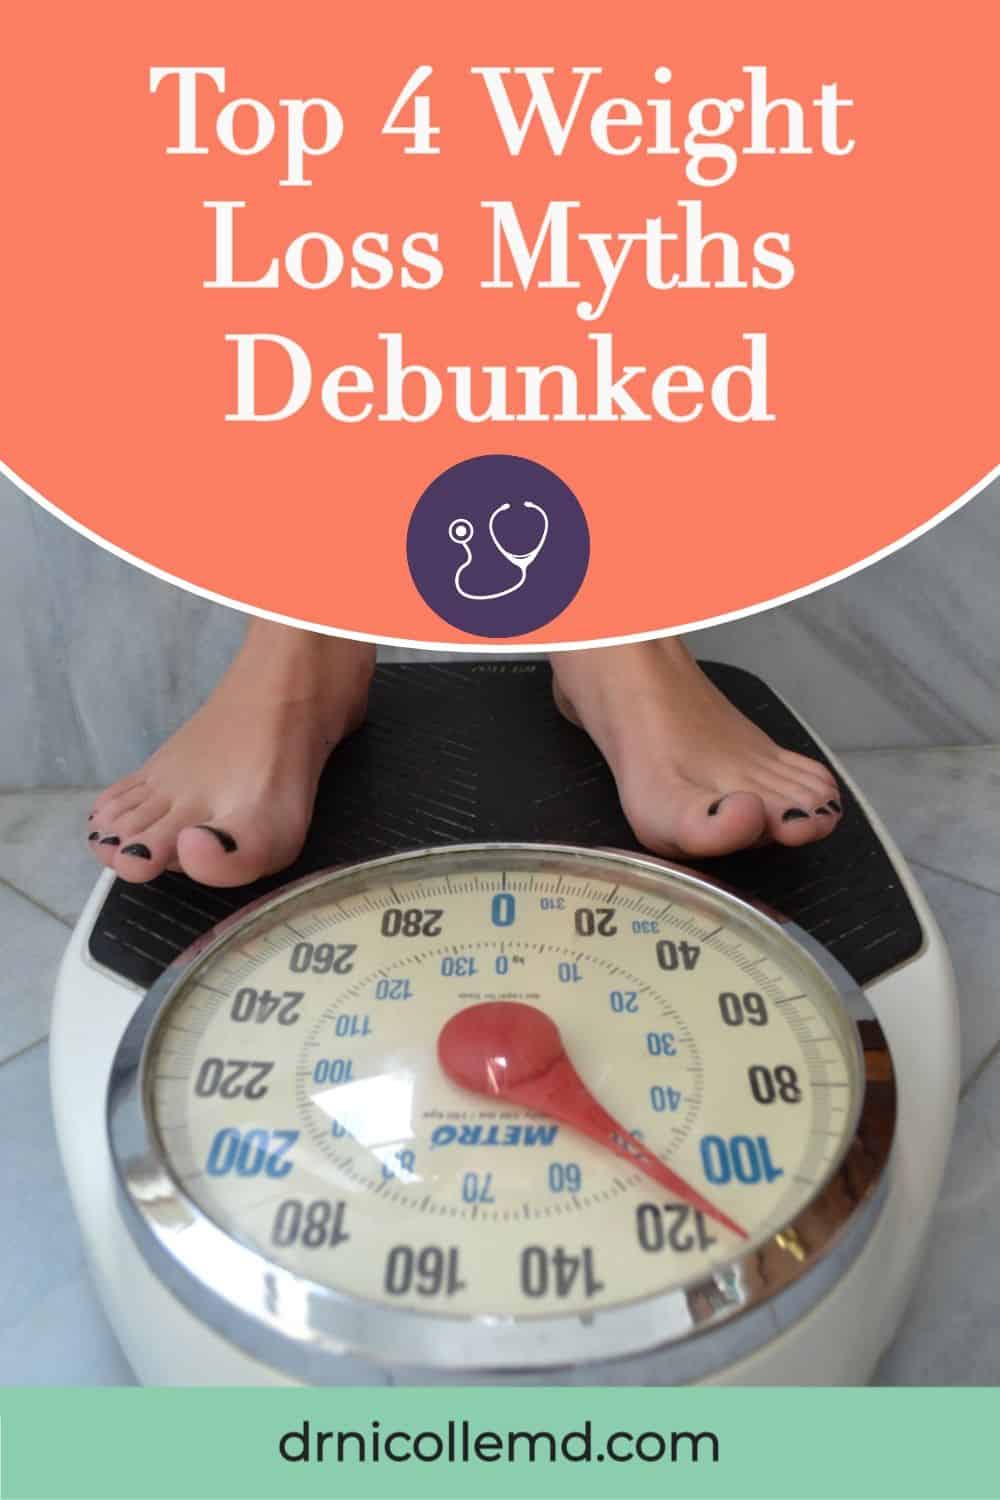 Top 4 Weight Loss Myths Debunked